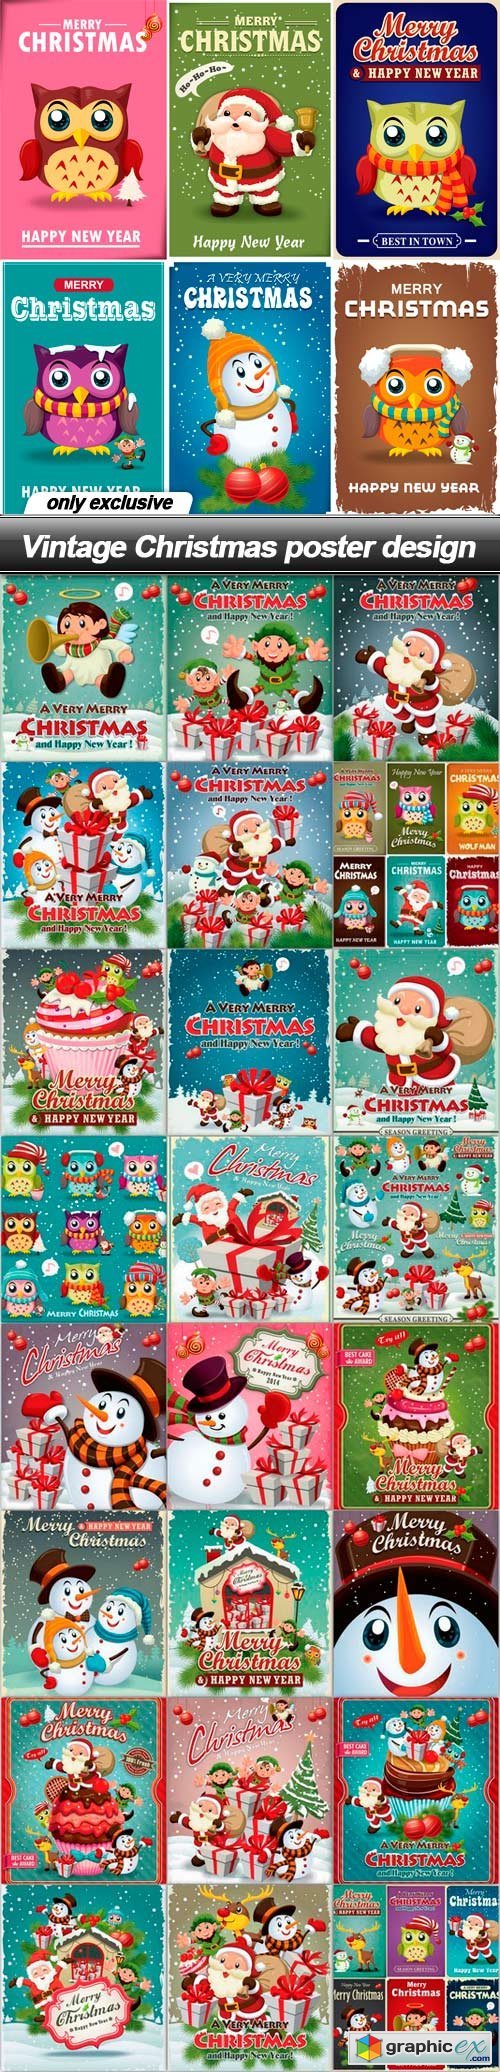 Vintage Christmas poster design - 25 EPS